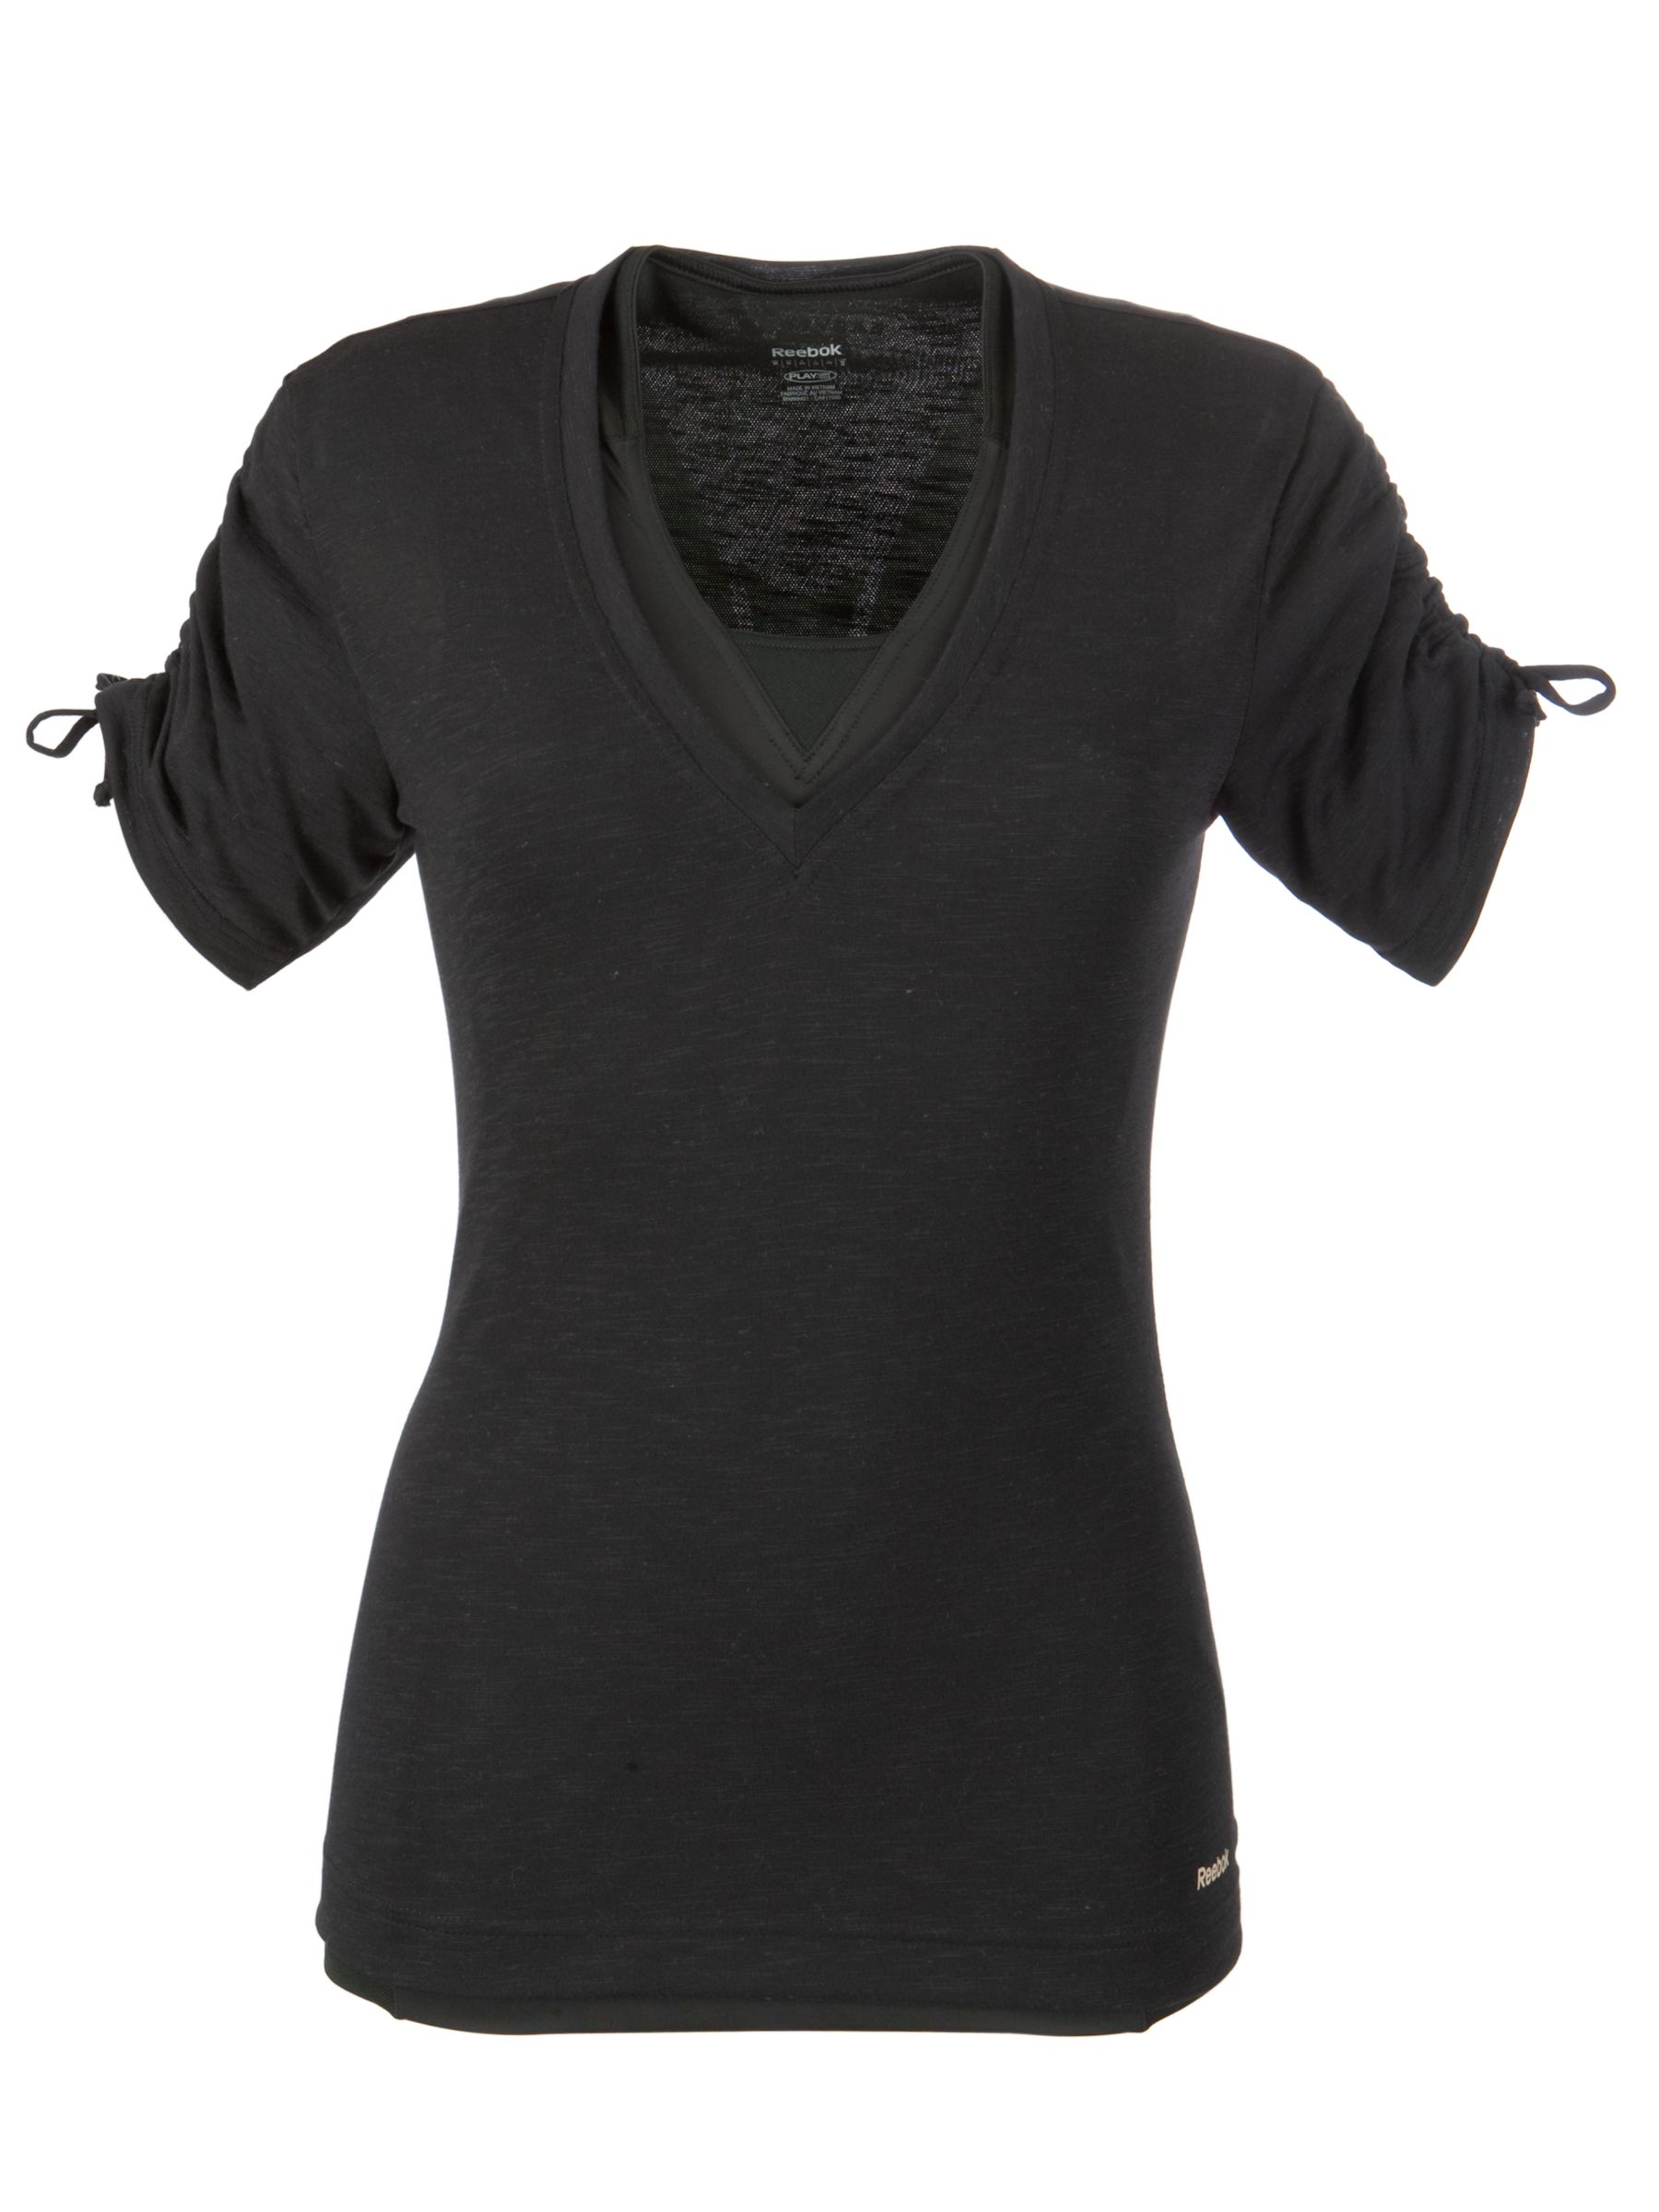 Easytone Double Layer T-Shirt, Black